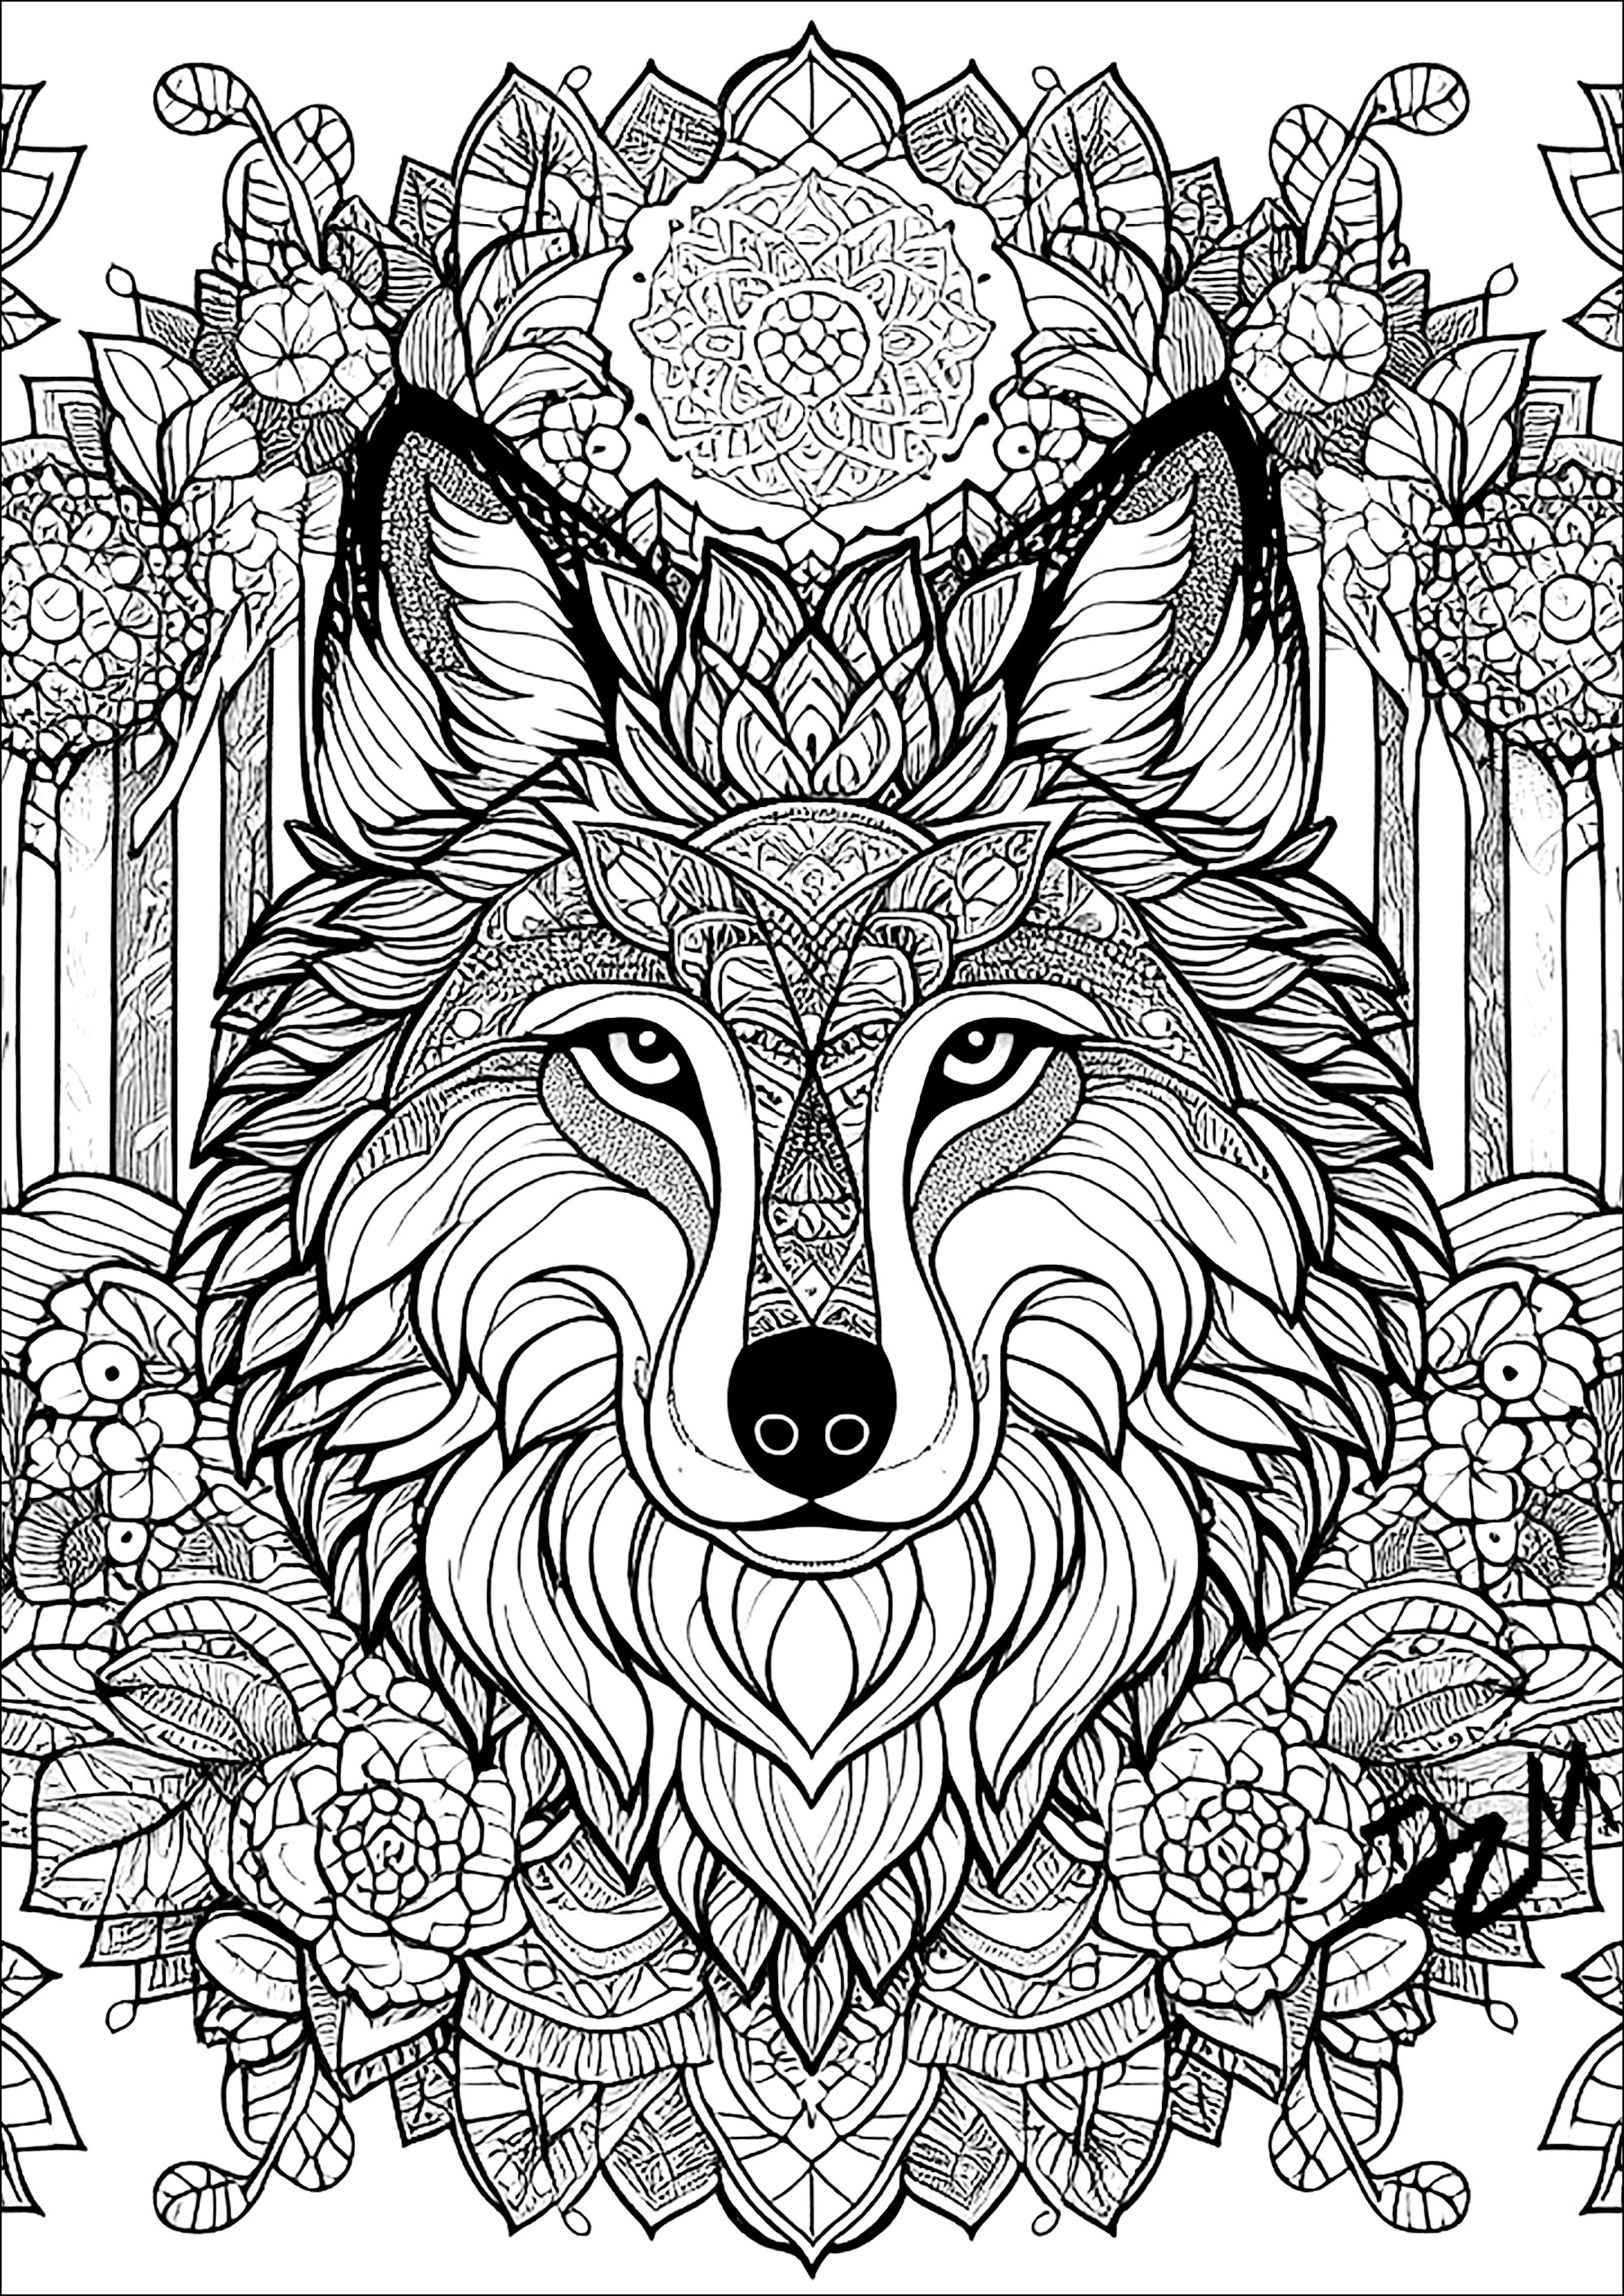 Il lupo e i mandala, Artista : Domandalas